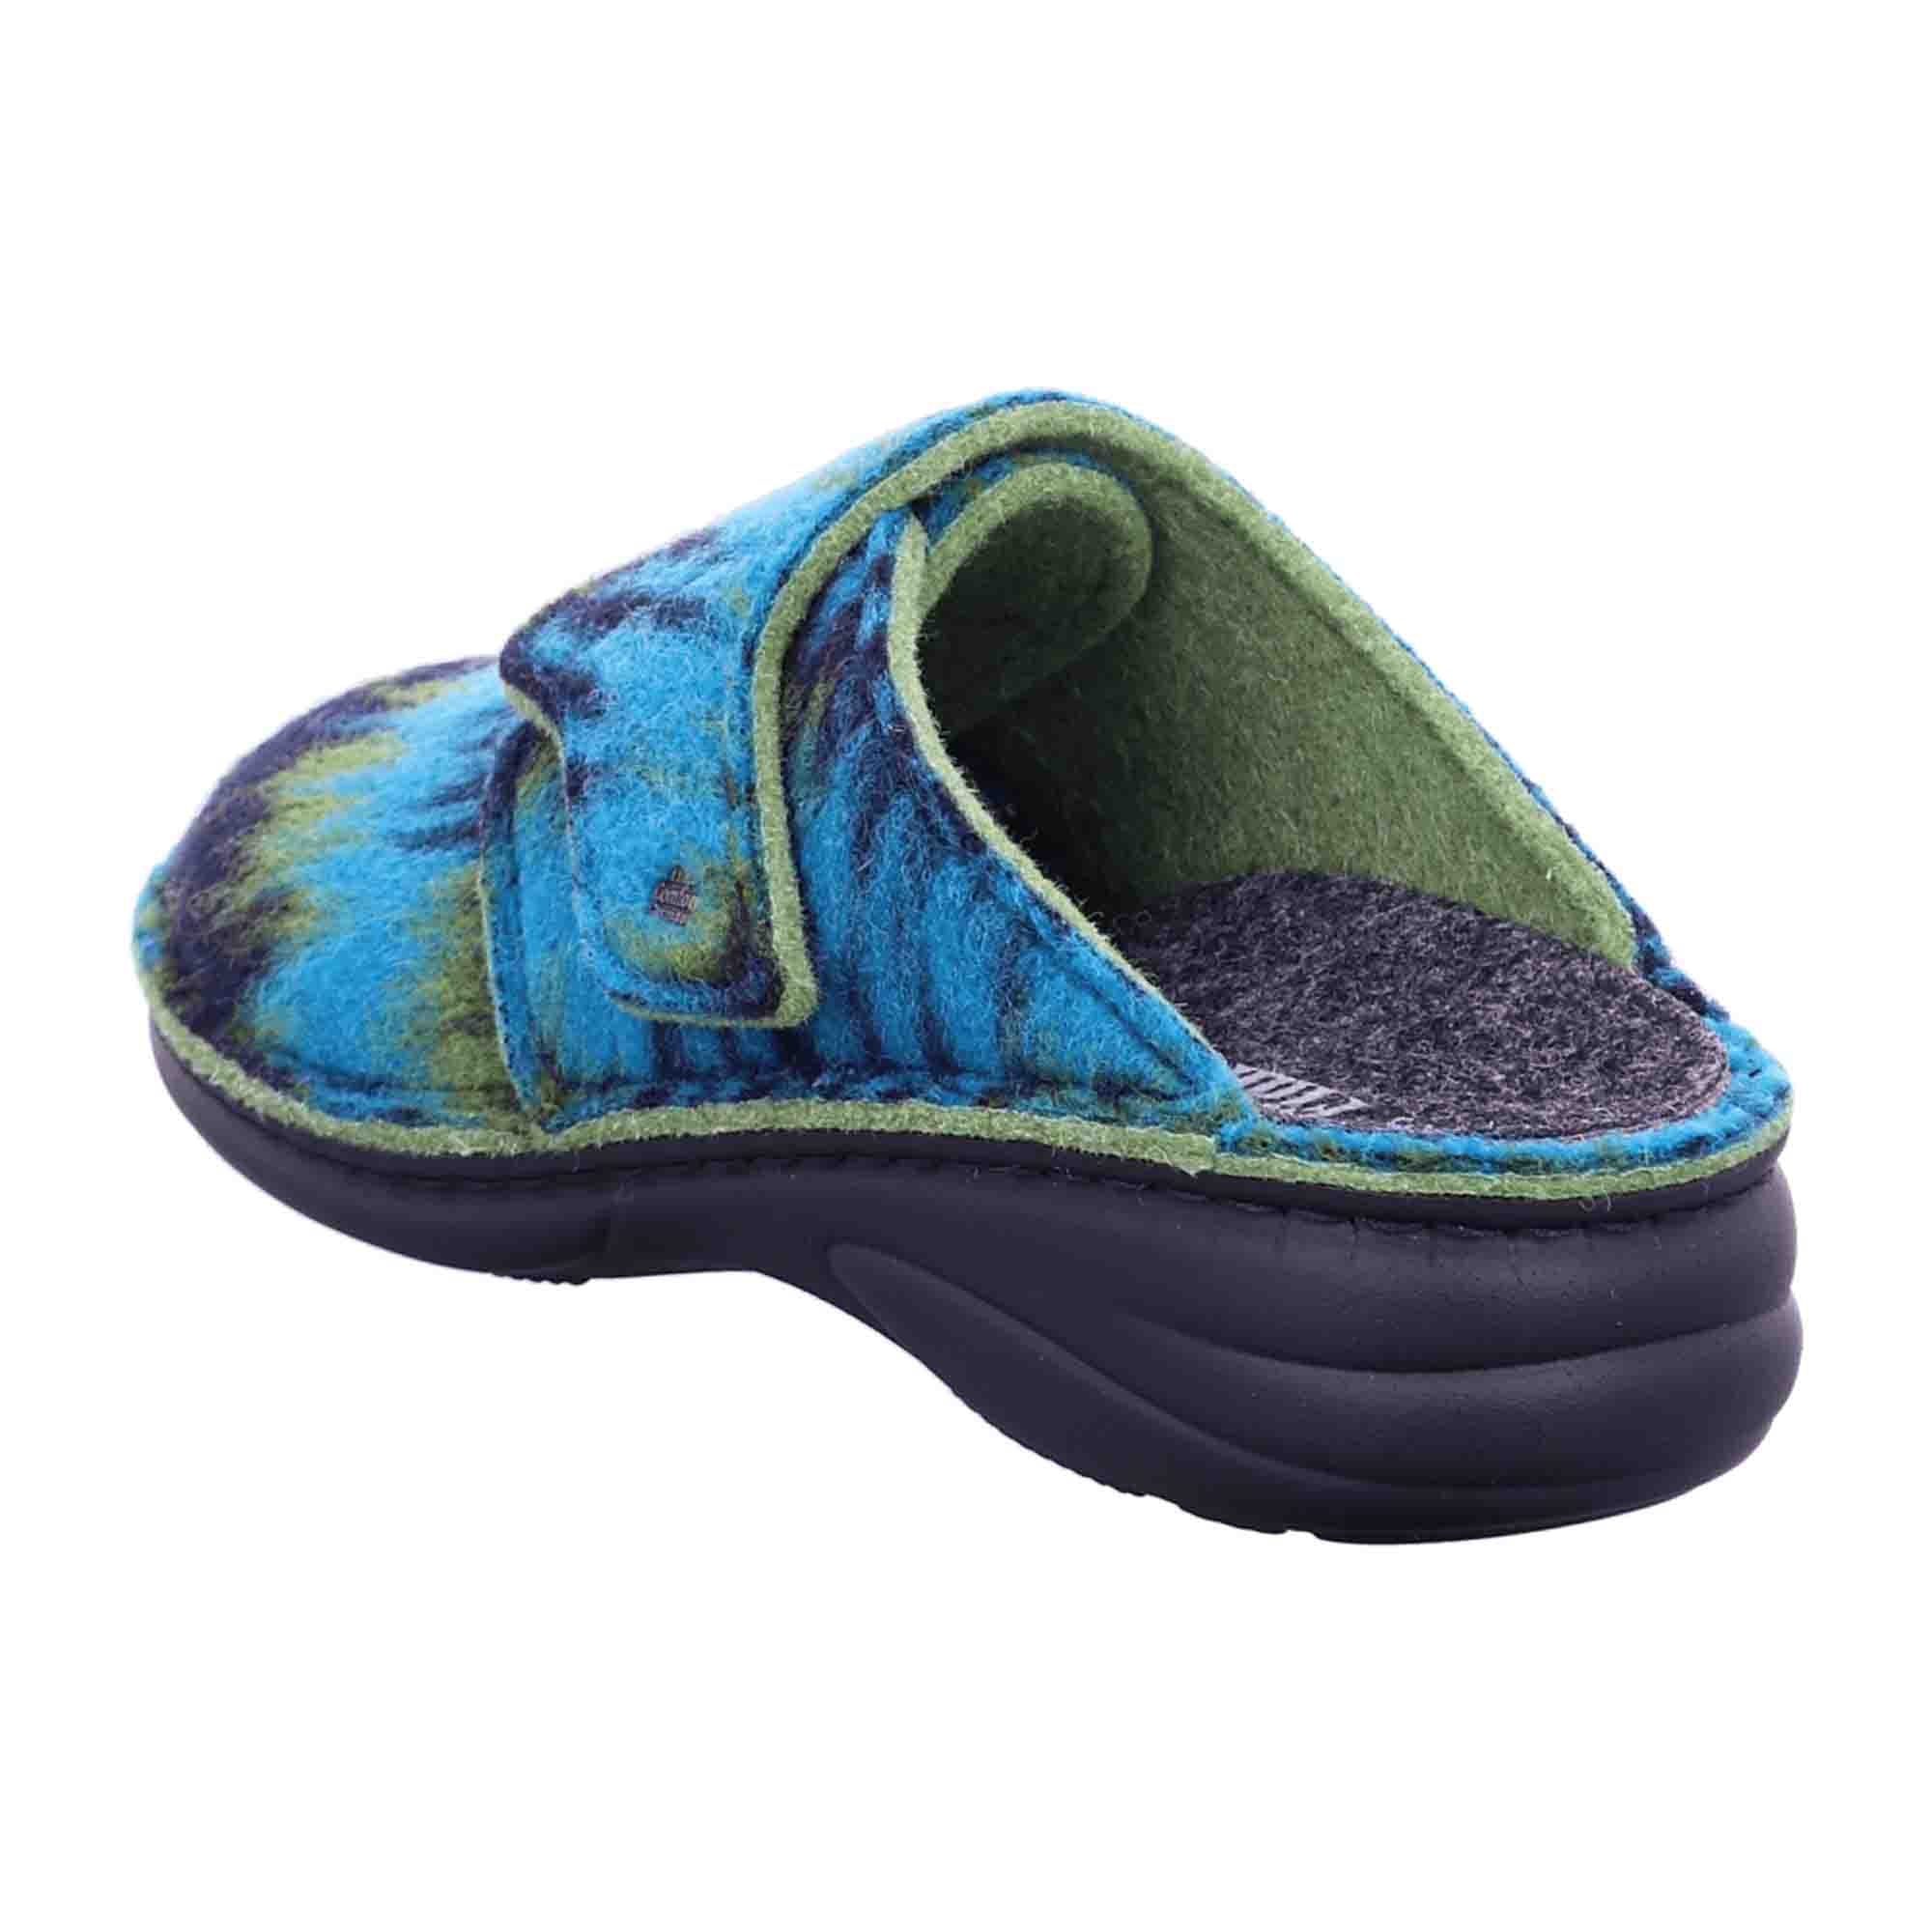 Finn Comfort GOMS Women's Comfort Shoes, Stylish Blue